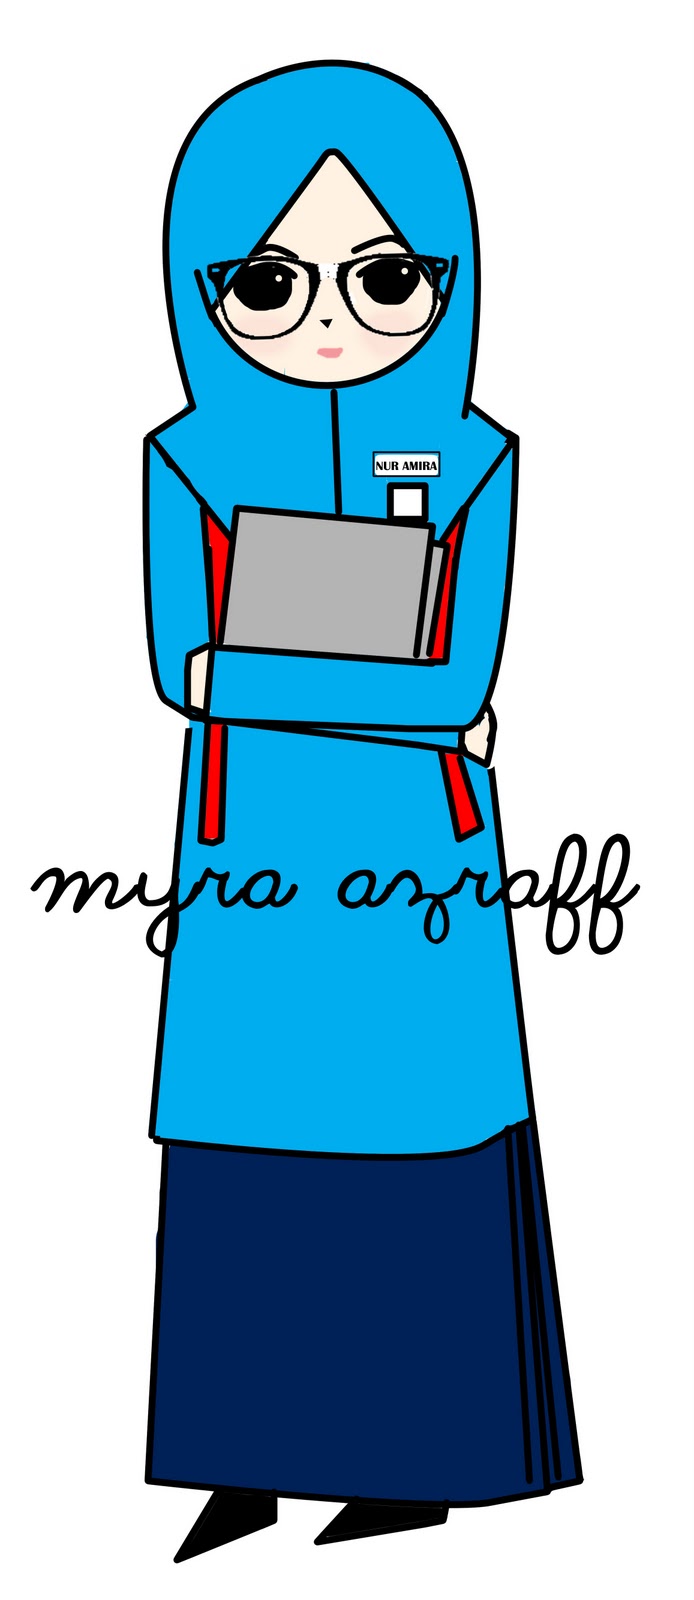 FREE STUFF Doodle Perempuan Beruniform Sekolah Myra Azraff